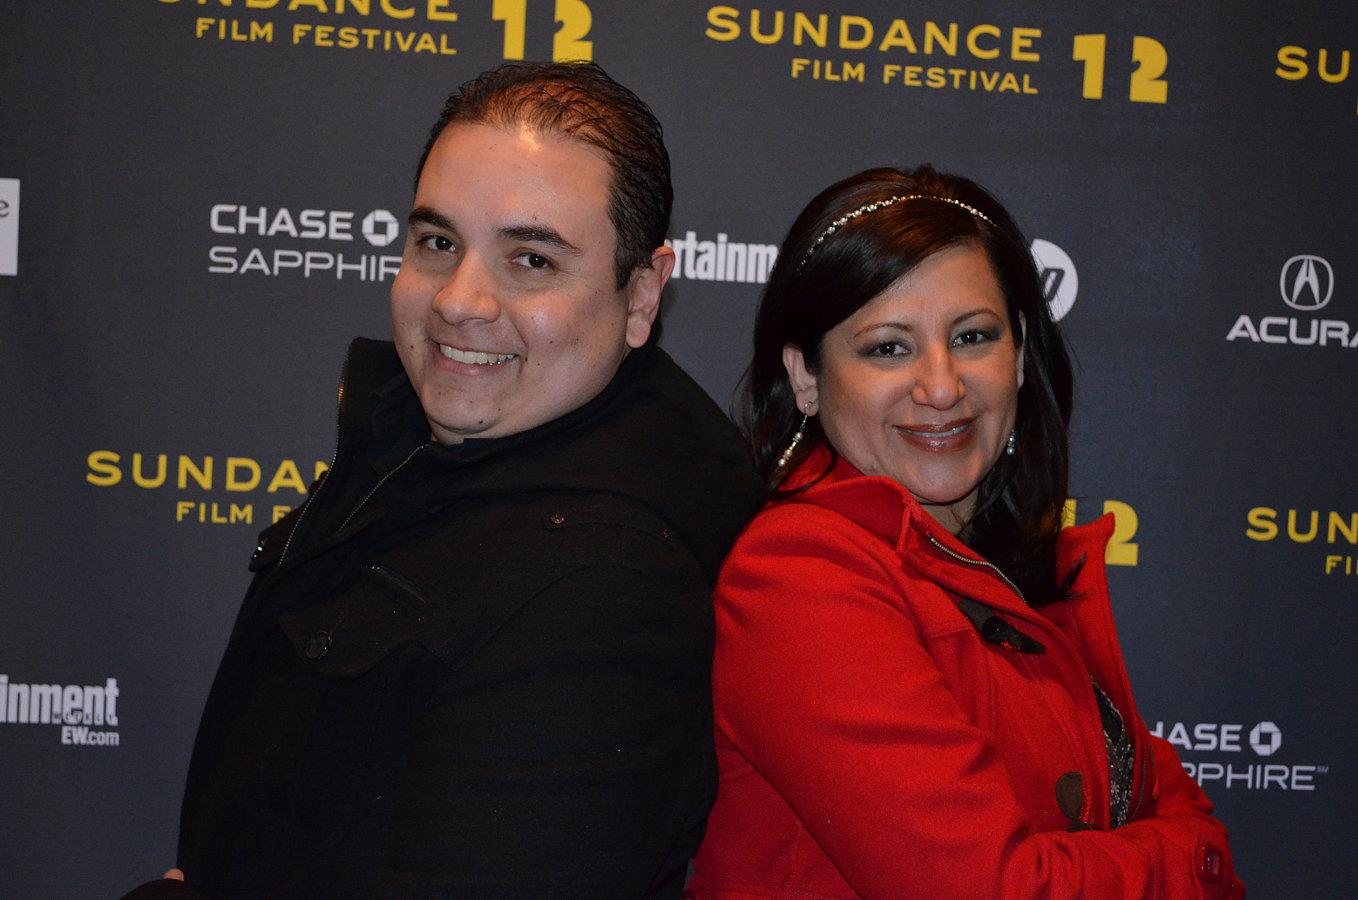 With my handsome Hubby @Sundance Film Festival